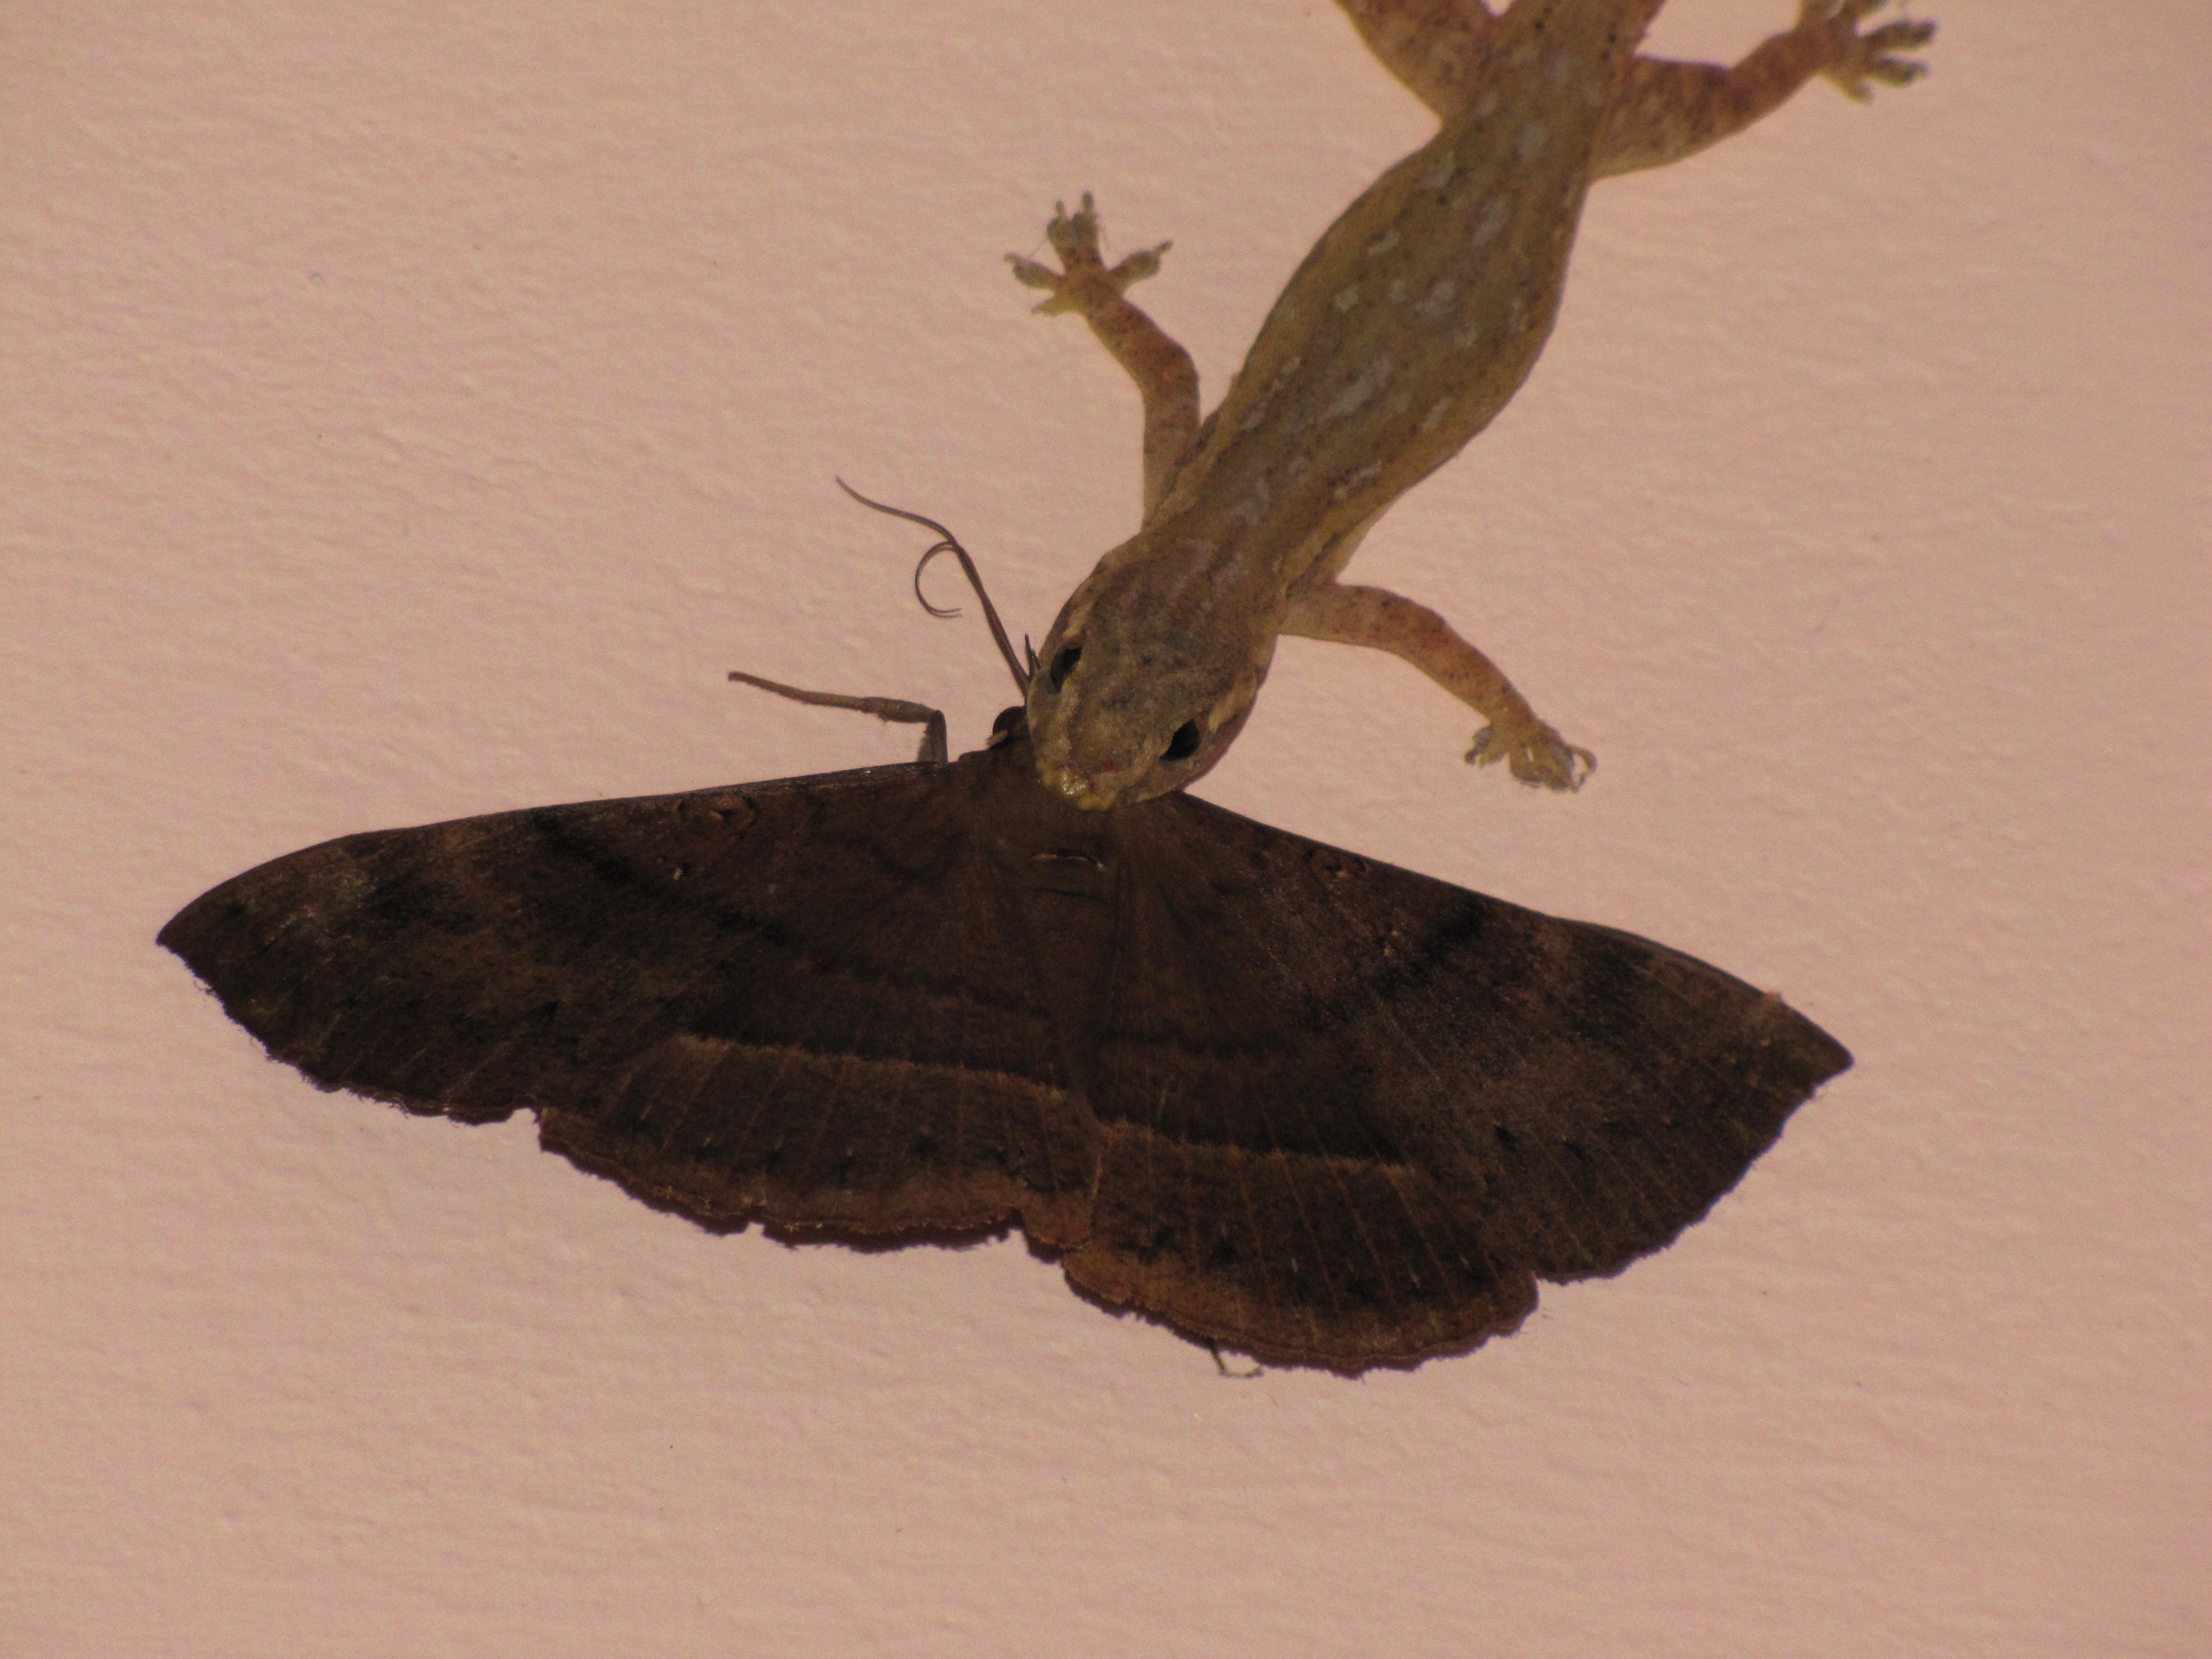 https://upload.wikimedia.org/wikipedia/commons/c/cd/Lizard_catching_the_moth.jpg